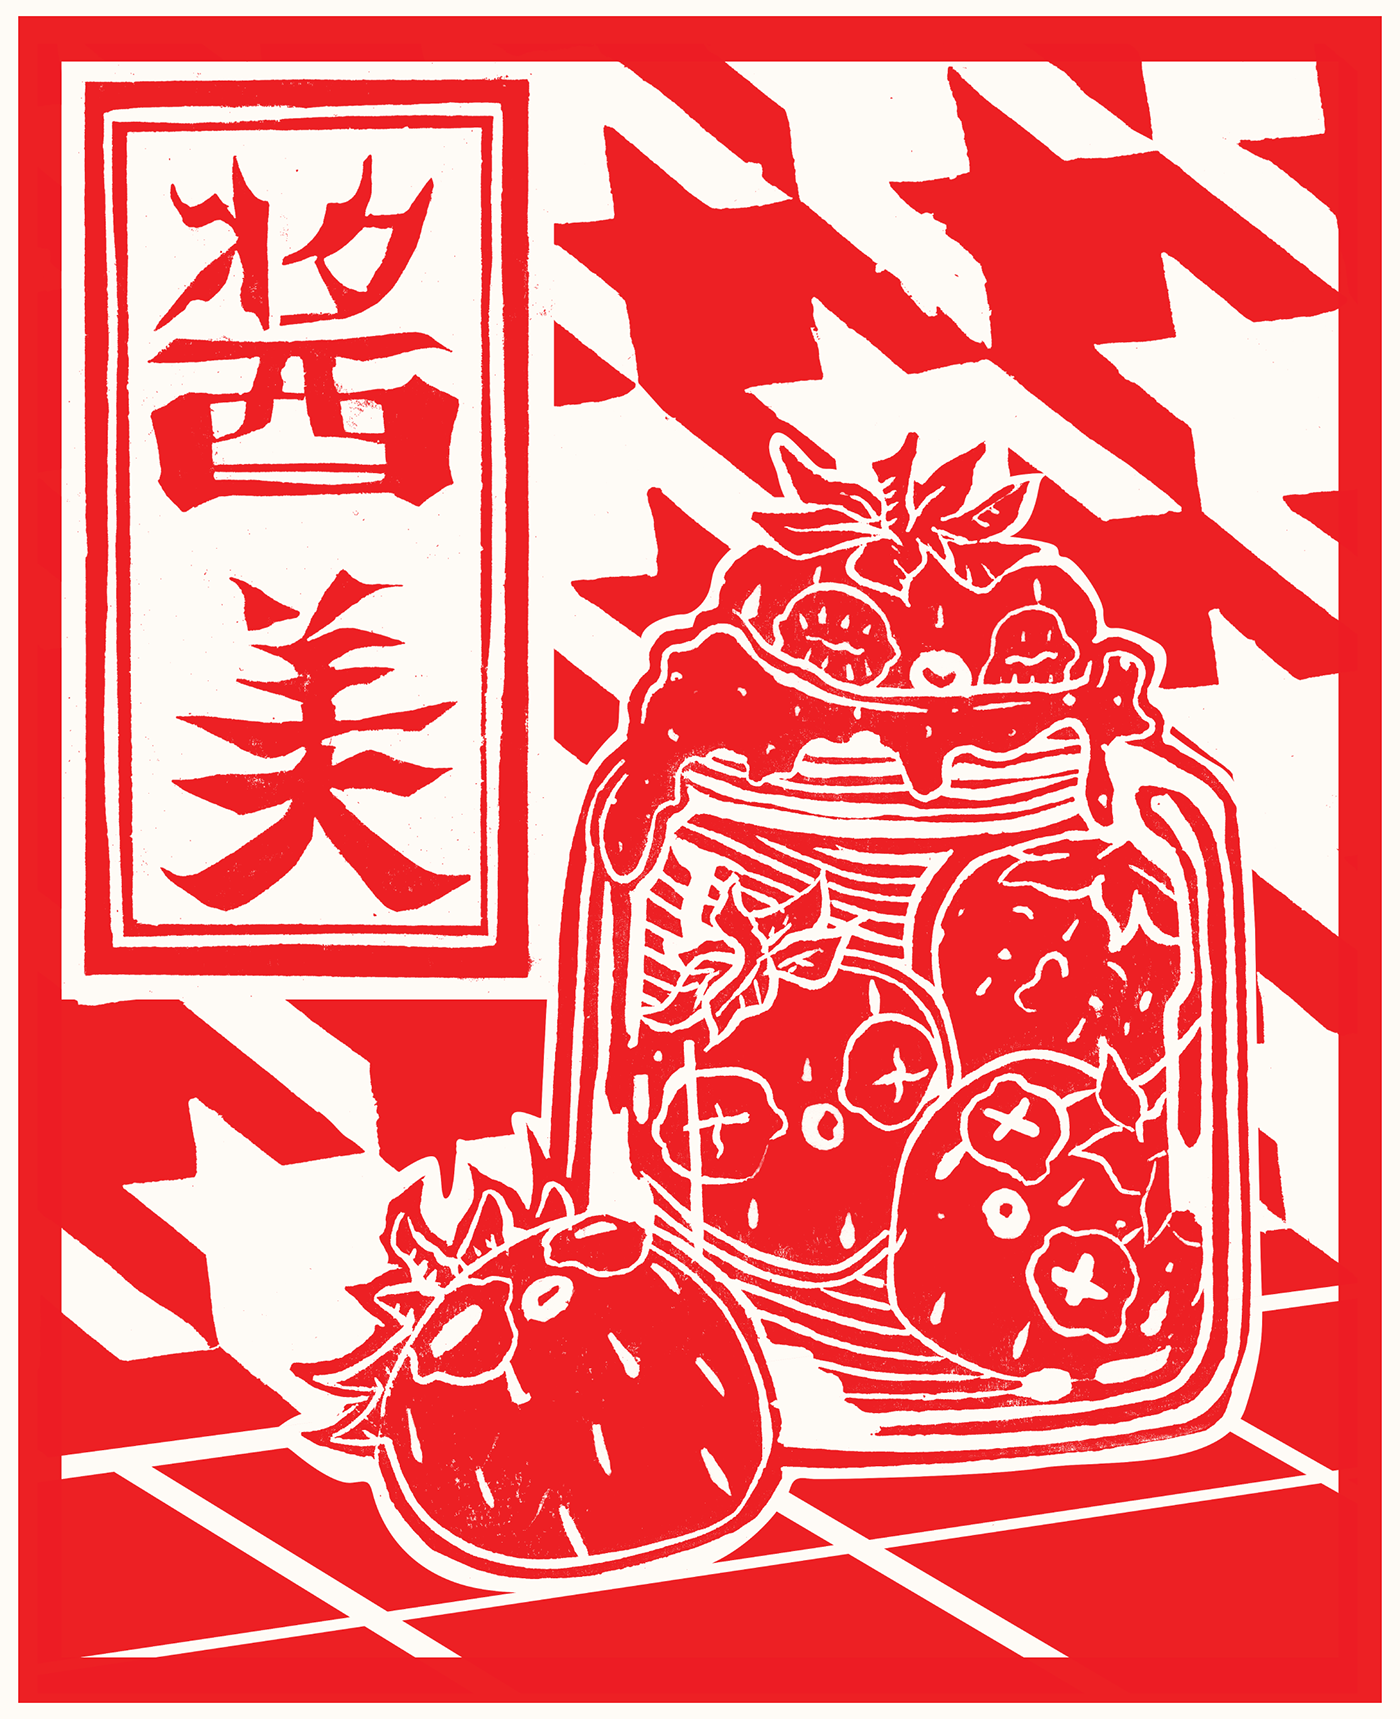 Strawberry Jam is Jiang Mei